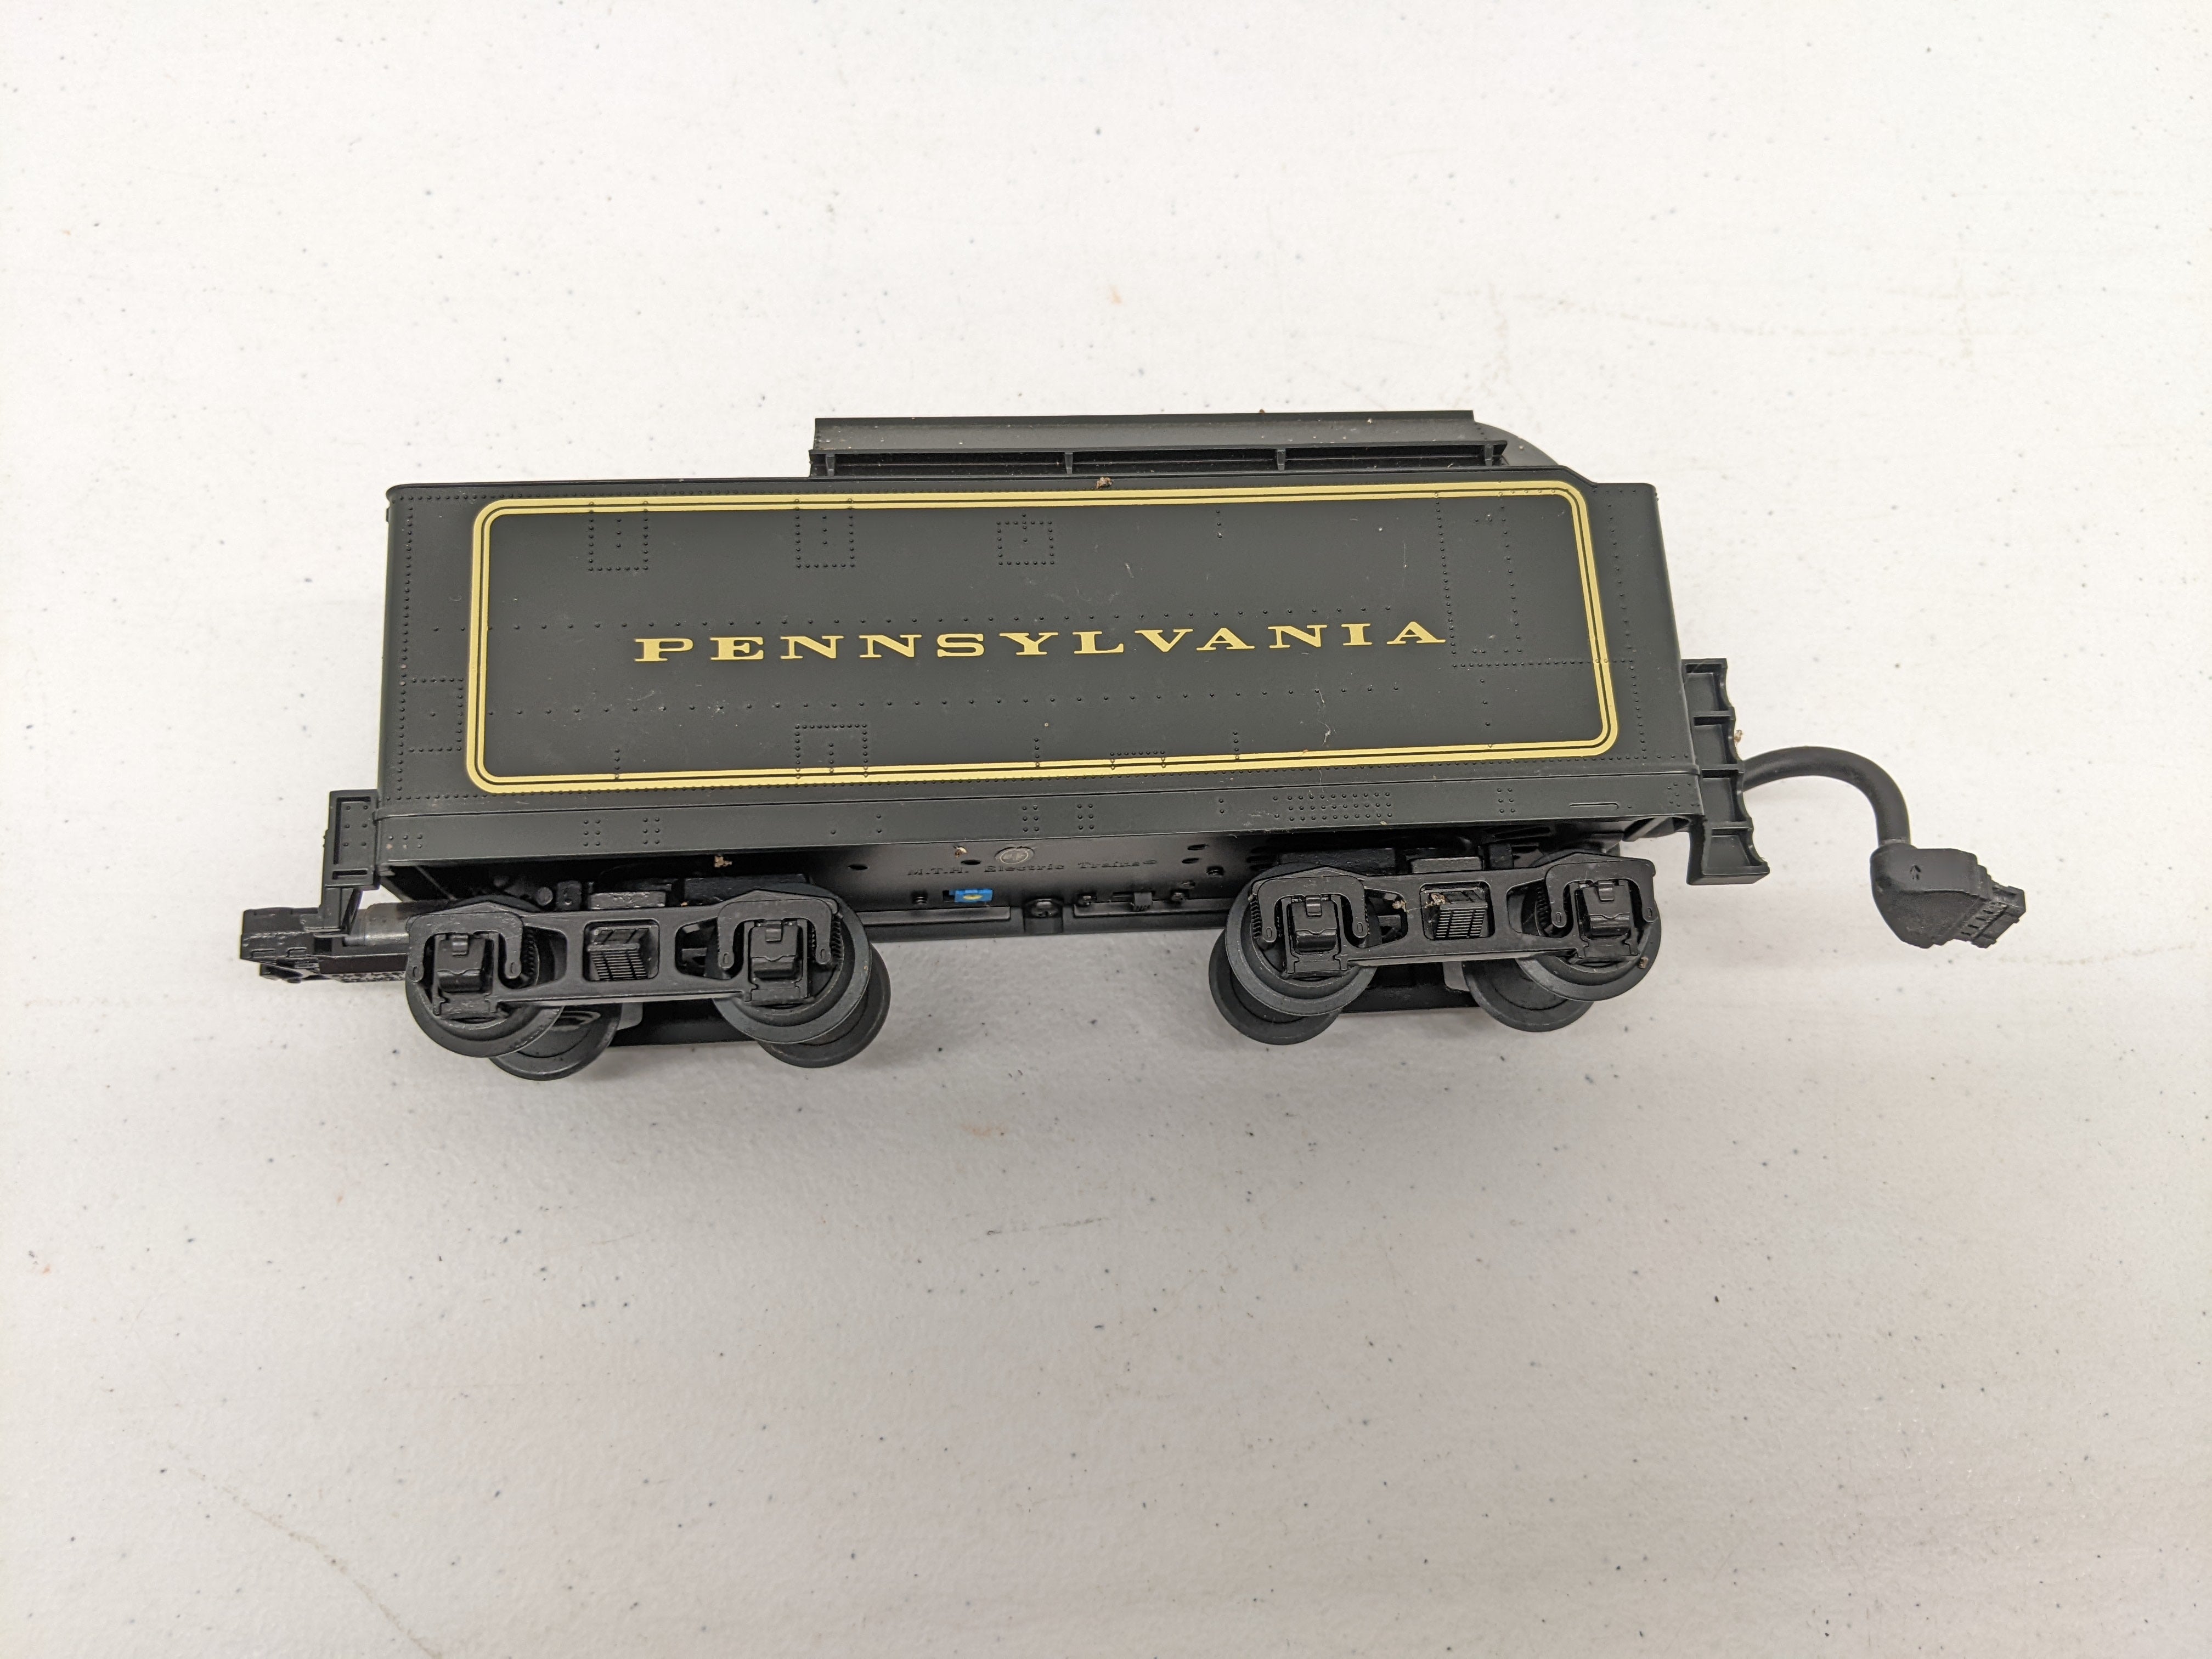 USED MTH Rail King 30-4103-1 O Scale, 2-8-0 Steam Locomotive, Pennsylvania #8014 (Proto-Sound 2.0)